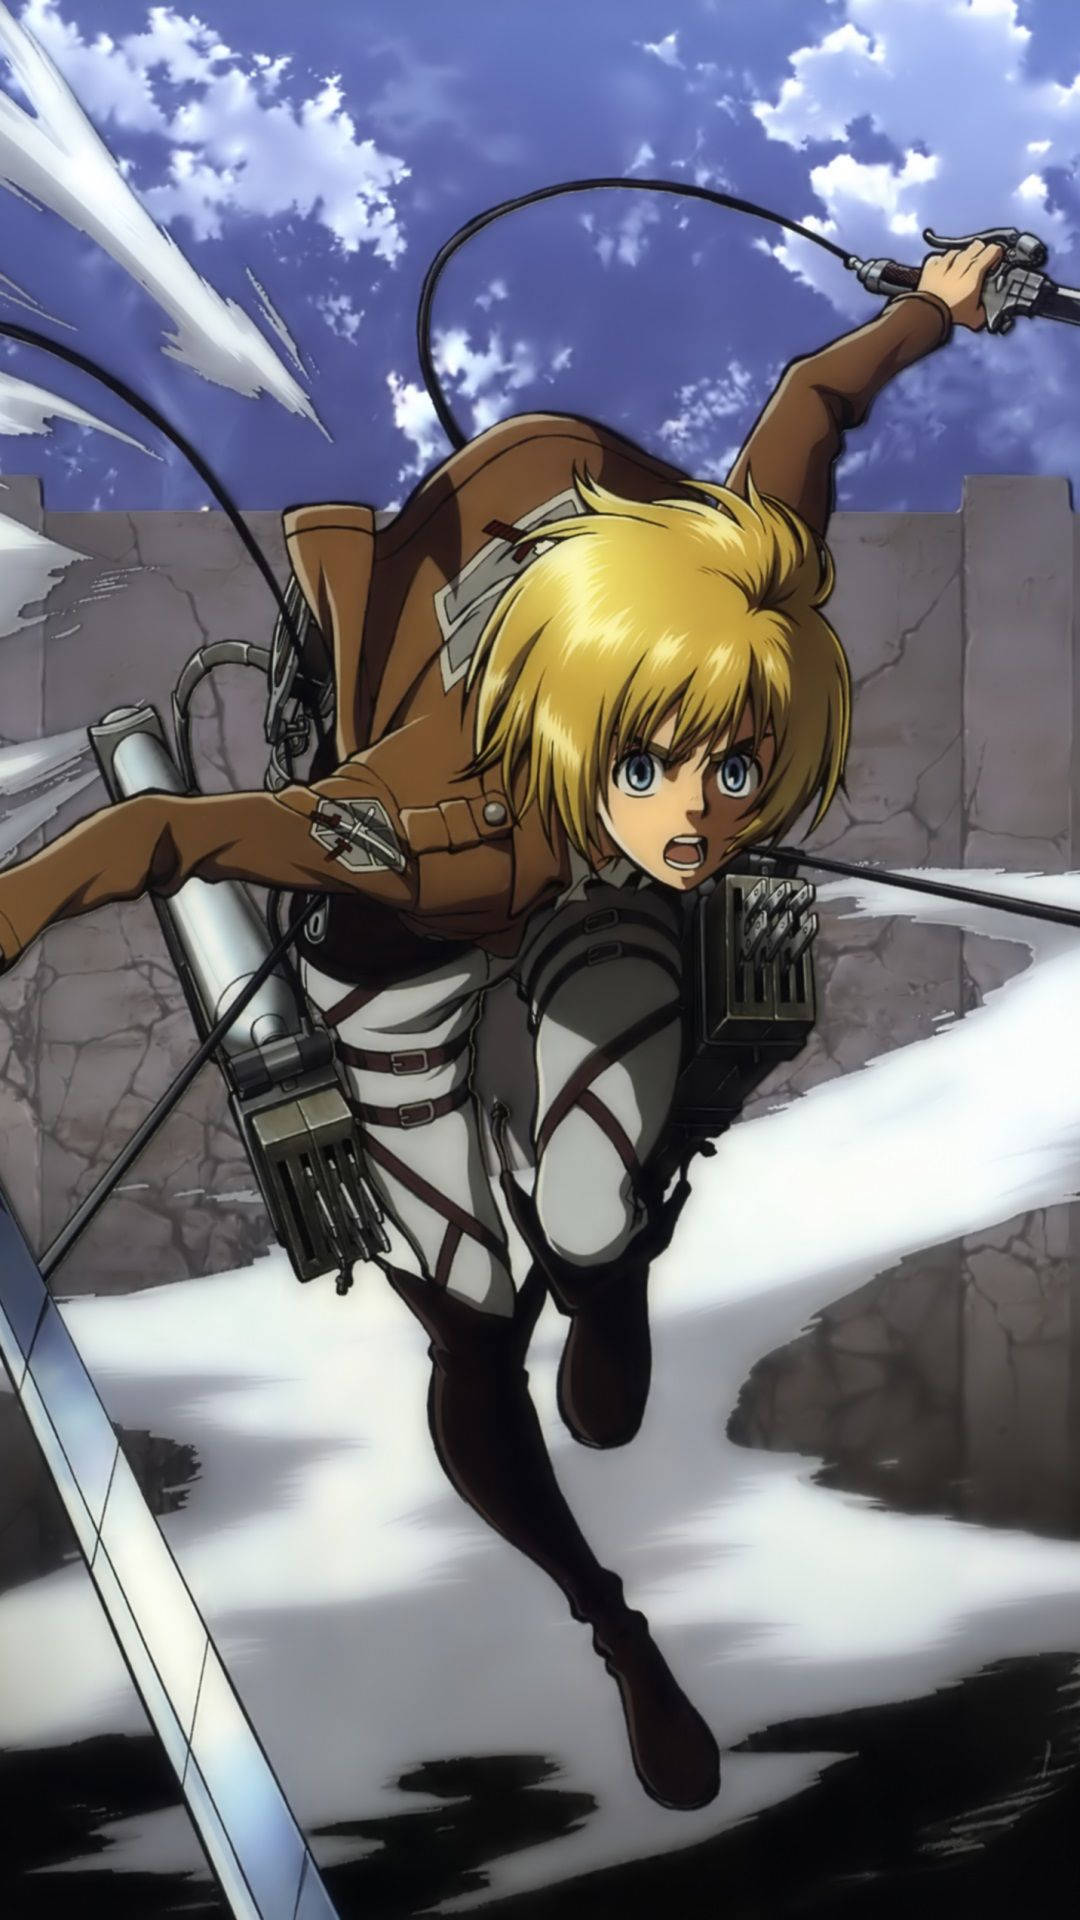 Armin Odm Gear Attack On Titan Iphone